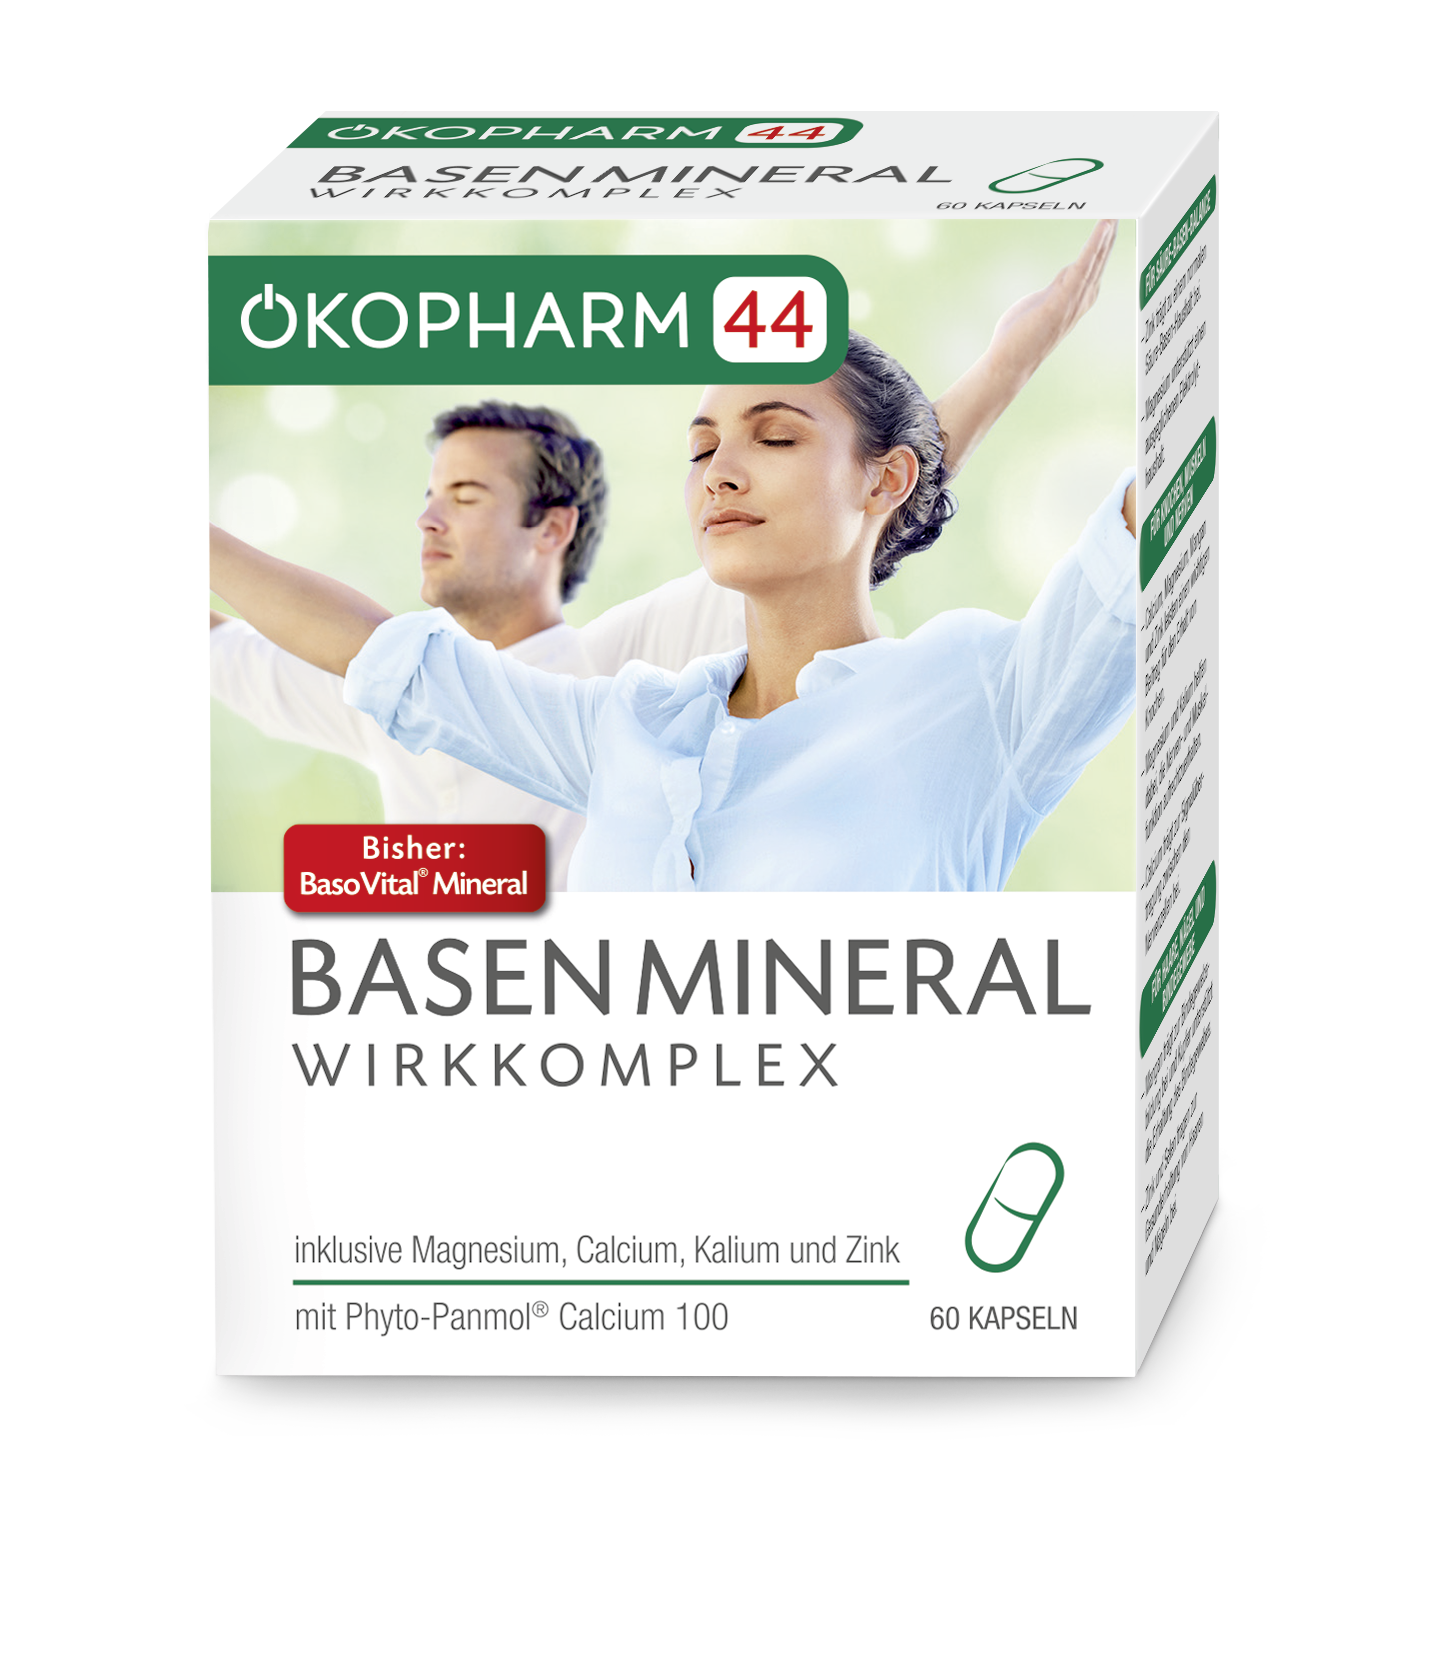 Ökopharm44® Basen Mineral Wirkkomplex Kapseln 60 ST